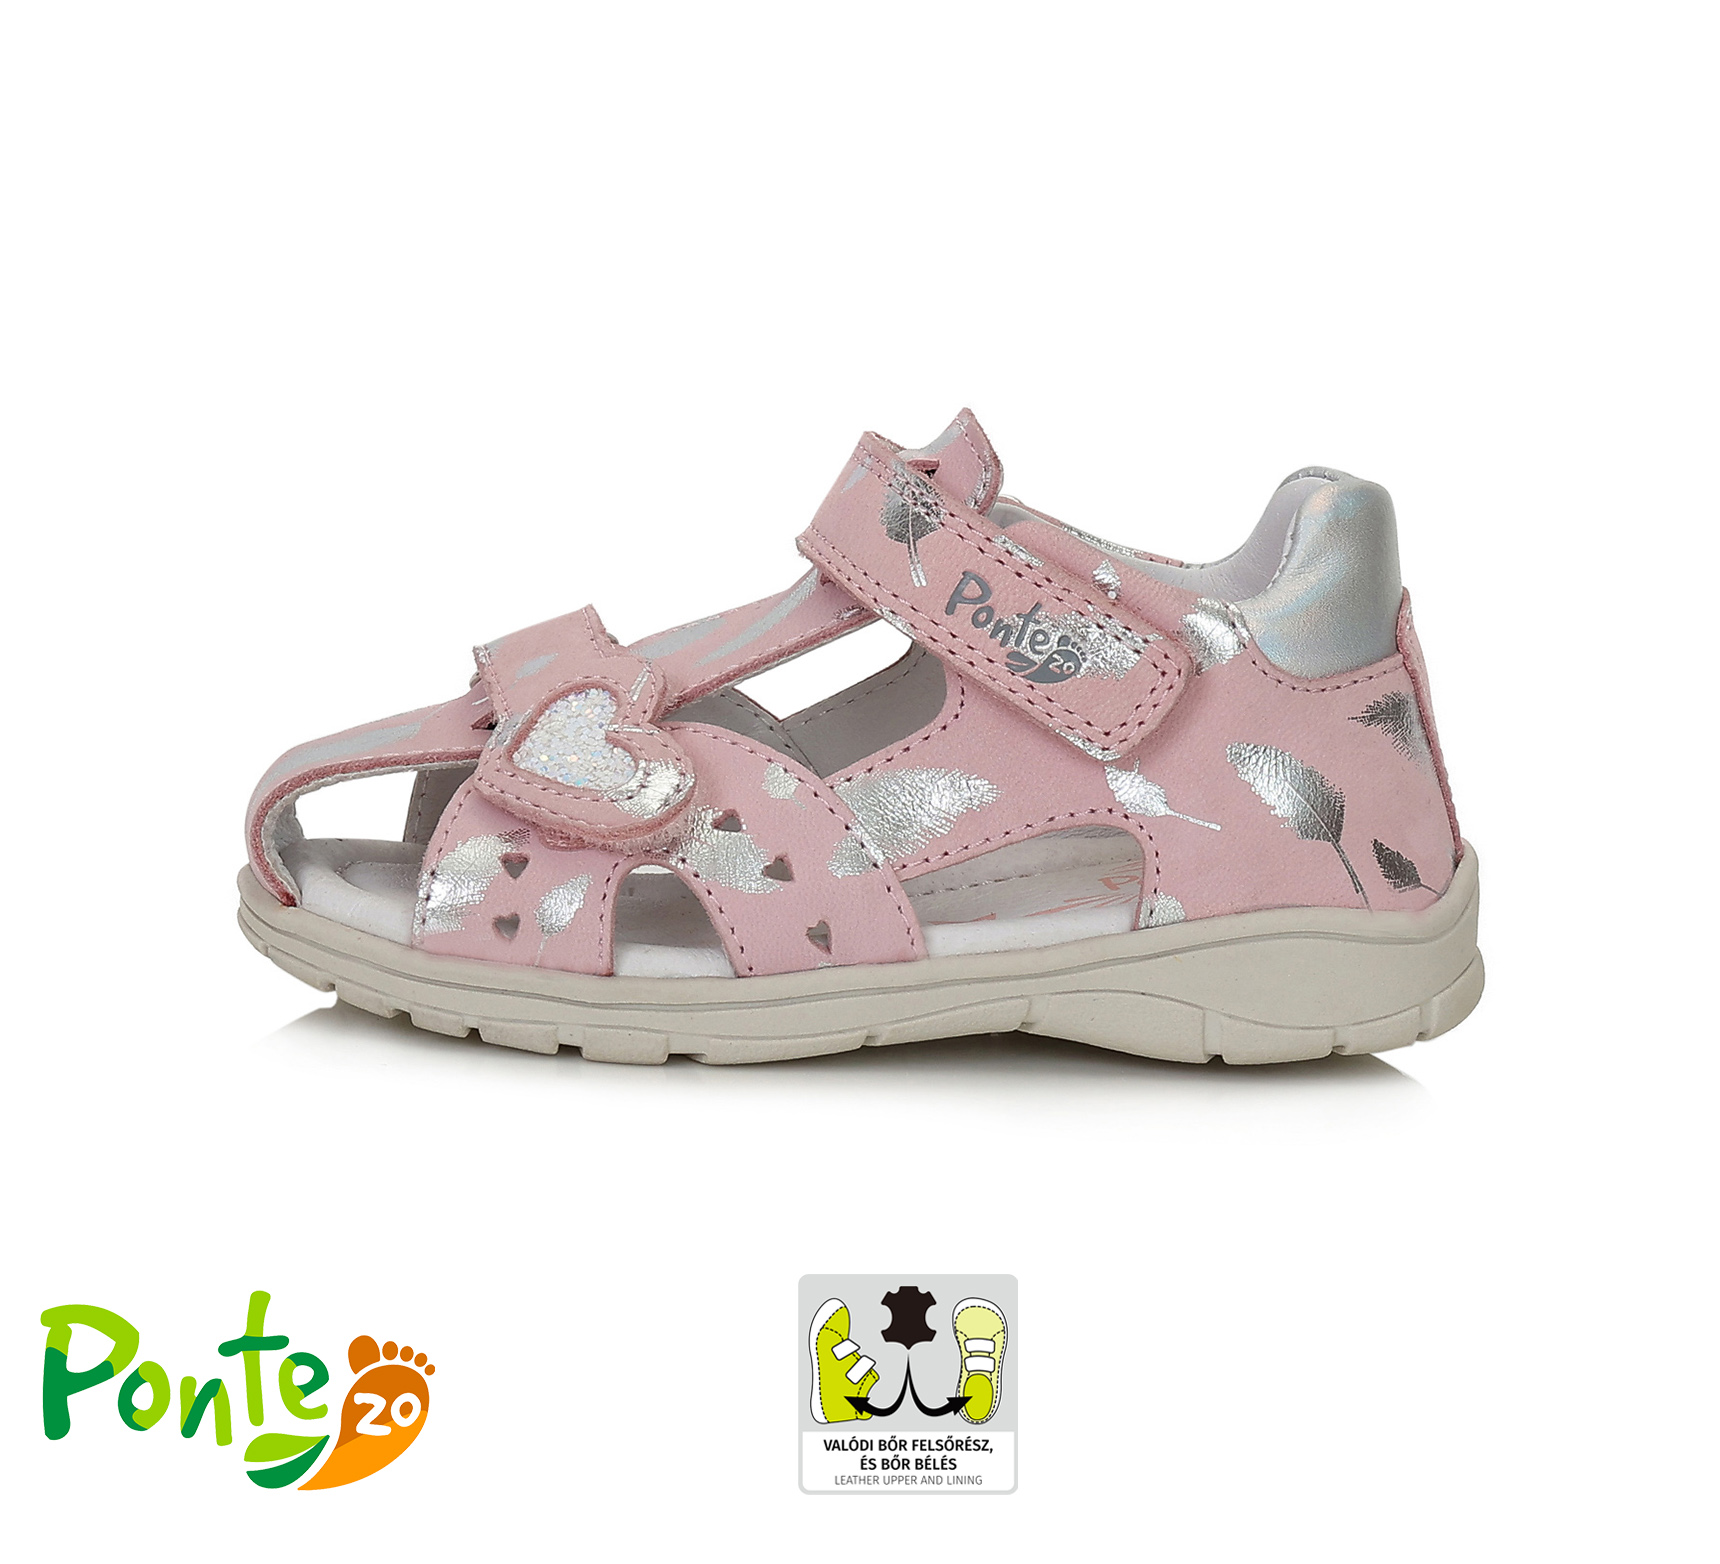 PONTE 20 dívčí kožené sandálky Pink/silver DA05-4-1949 Velikost: 23